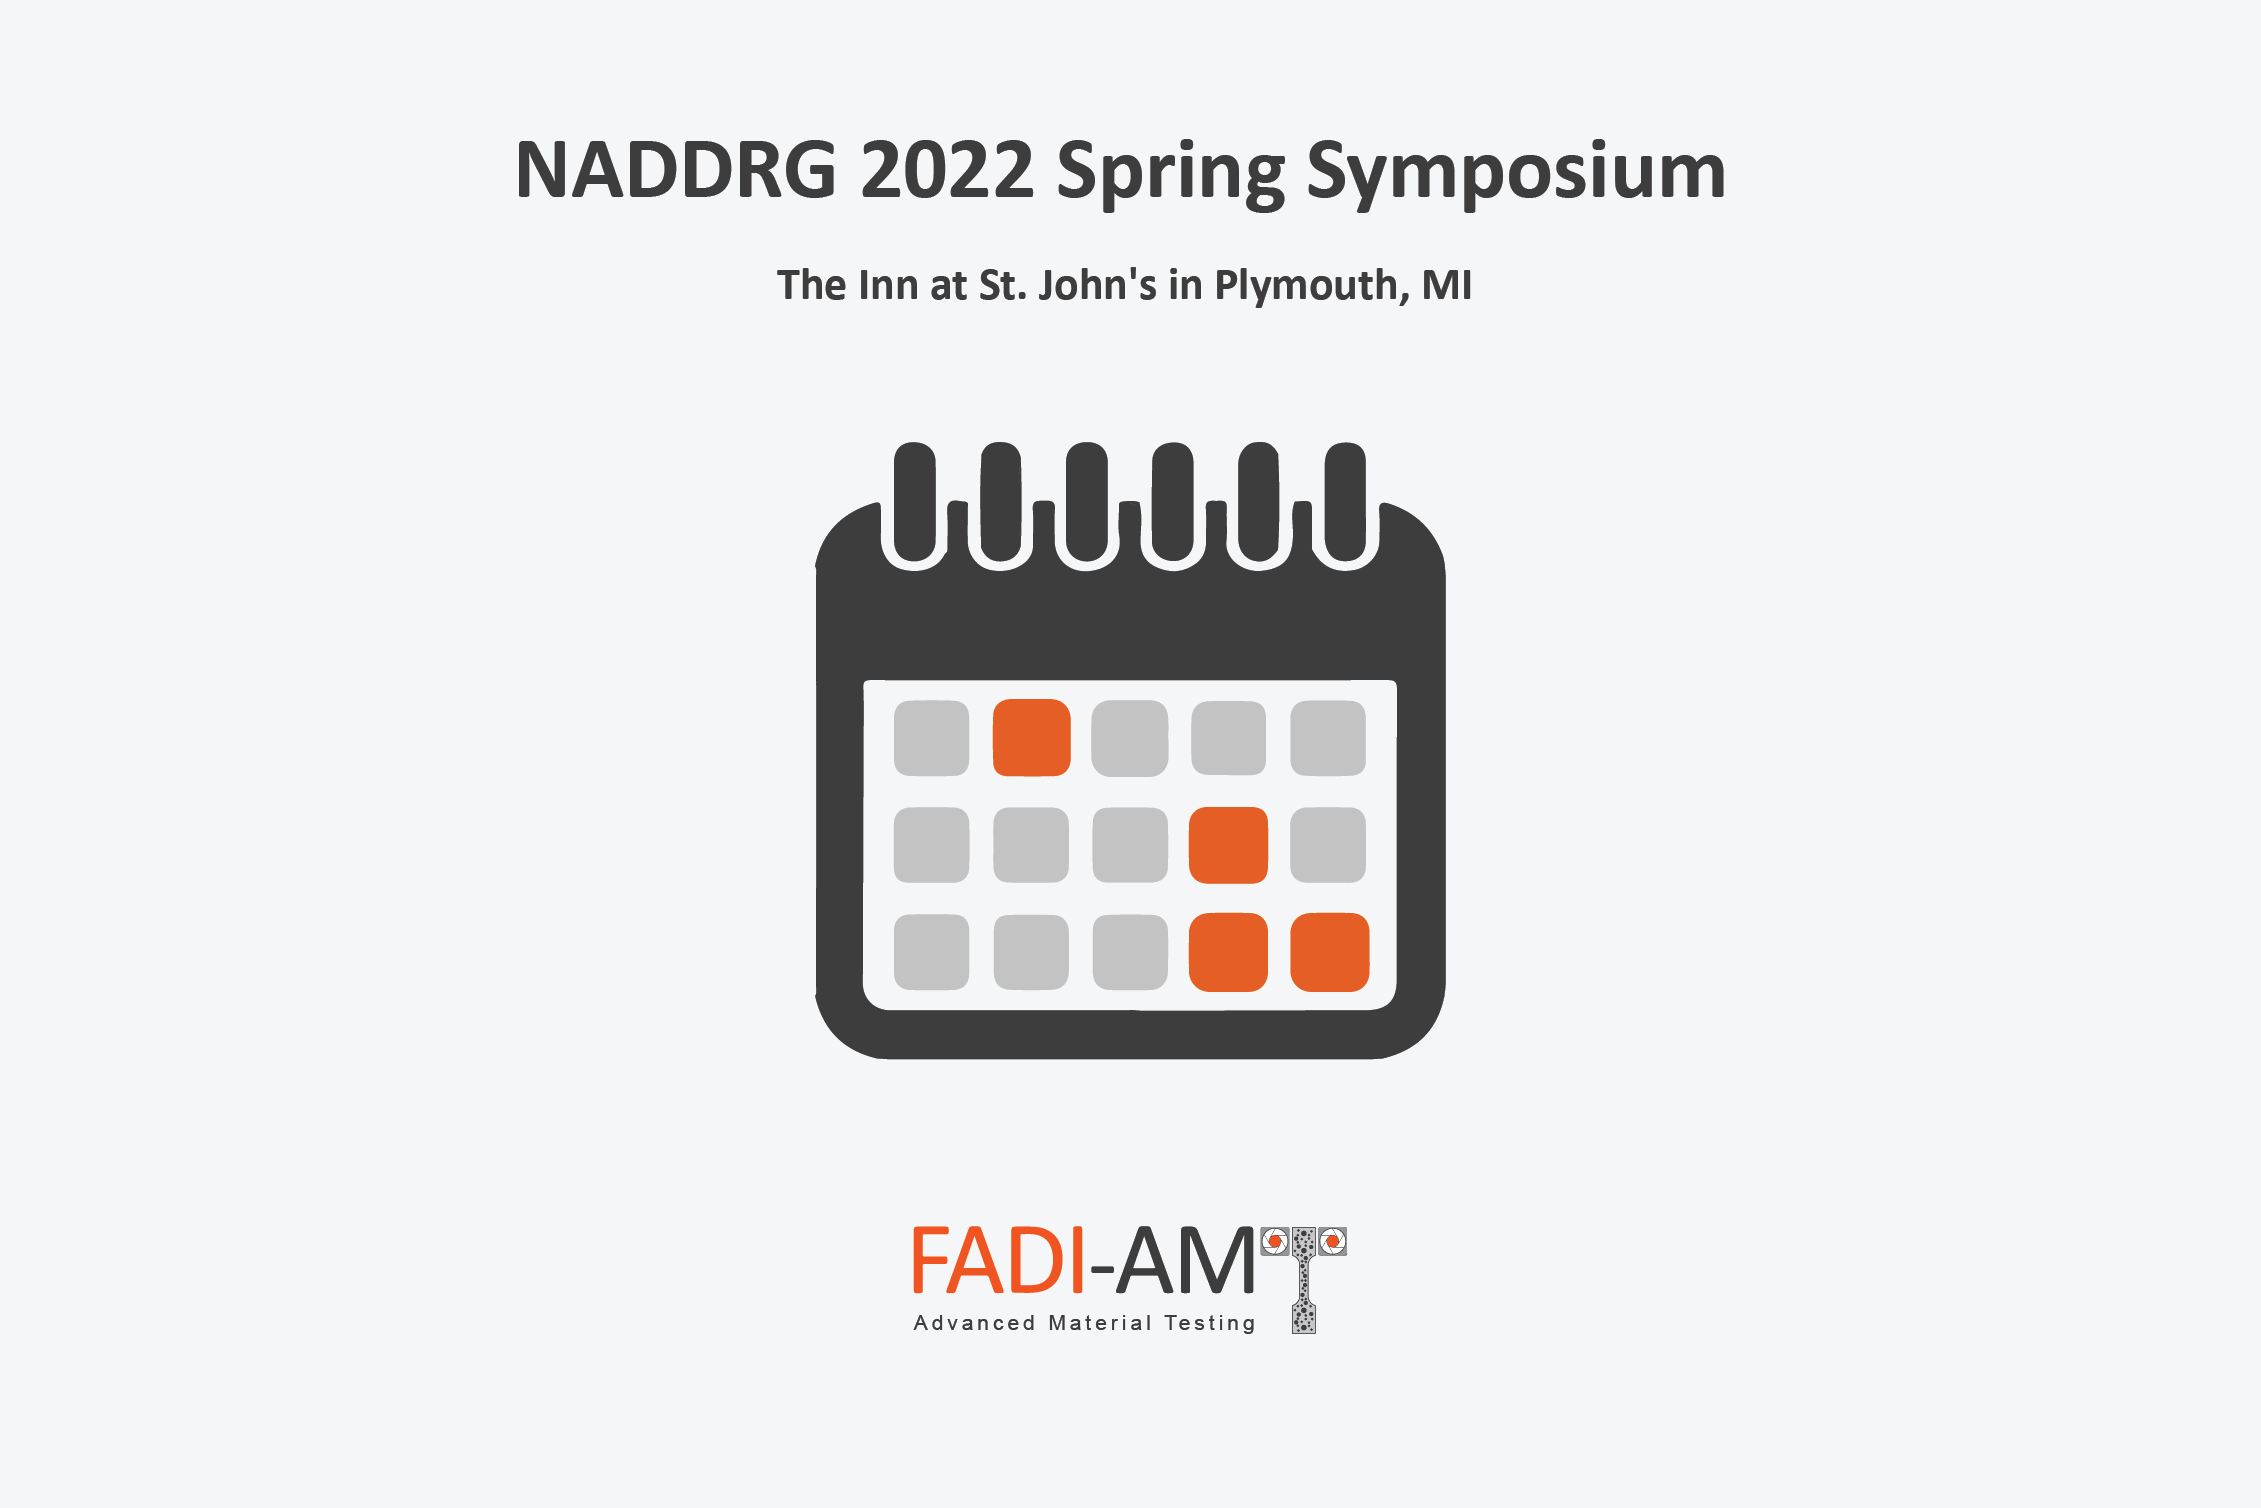 NADDRG 2022 Spring Symposium, FADI-AMT Events